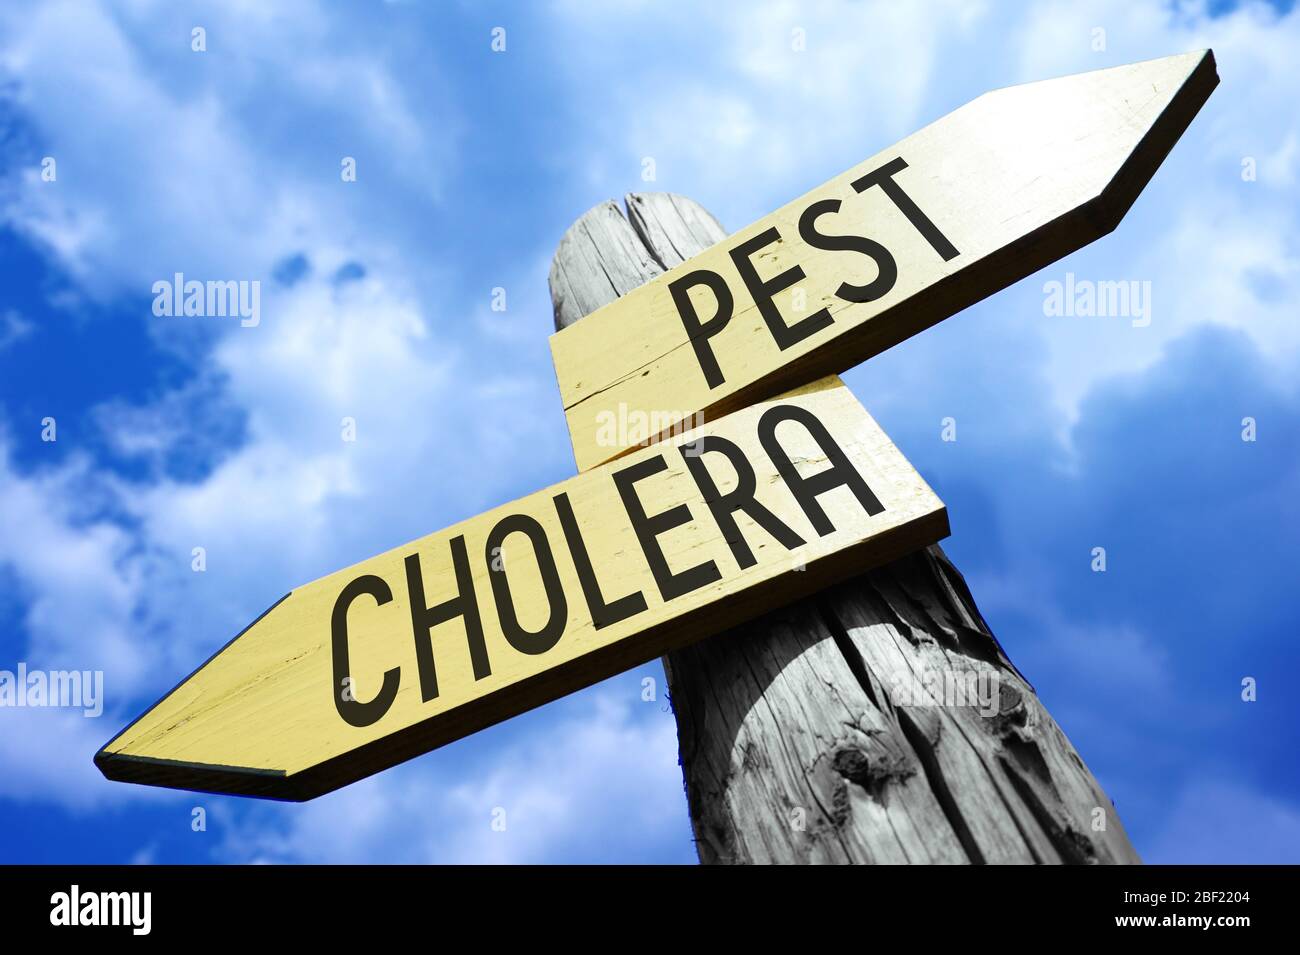 Pest, cholera - wooden signpost Stock Photo